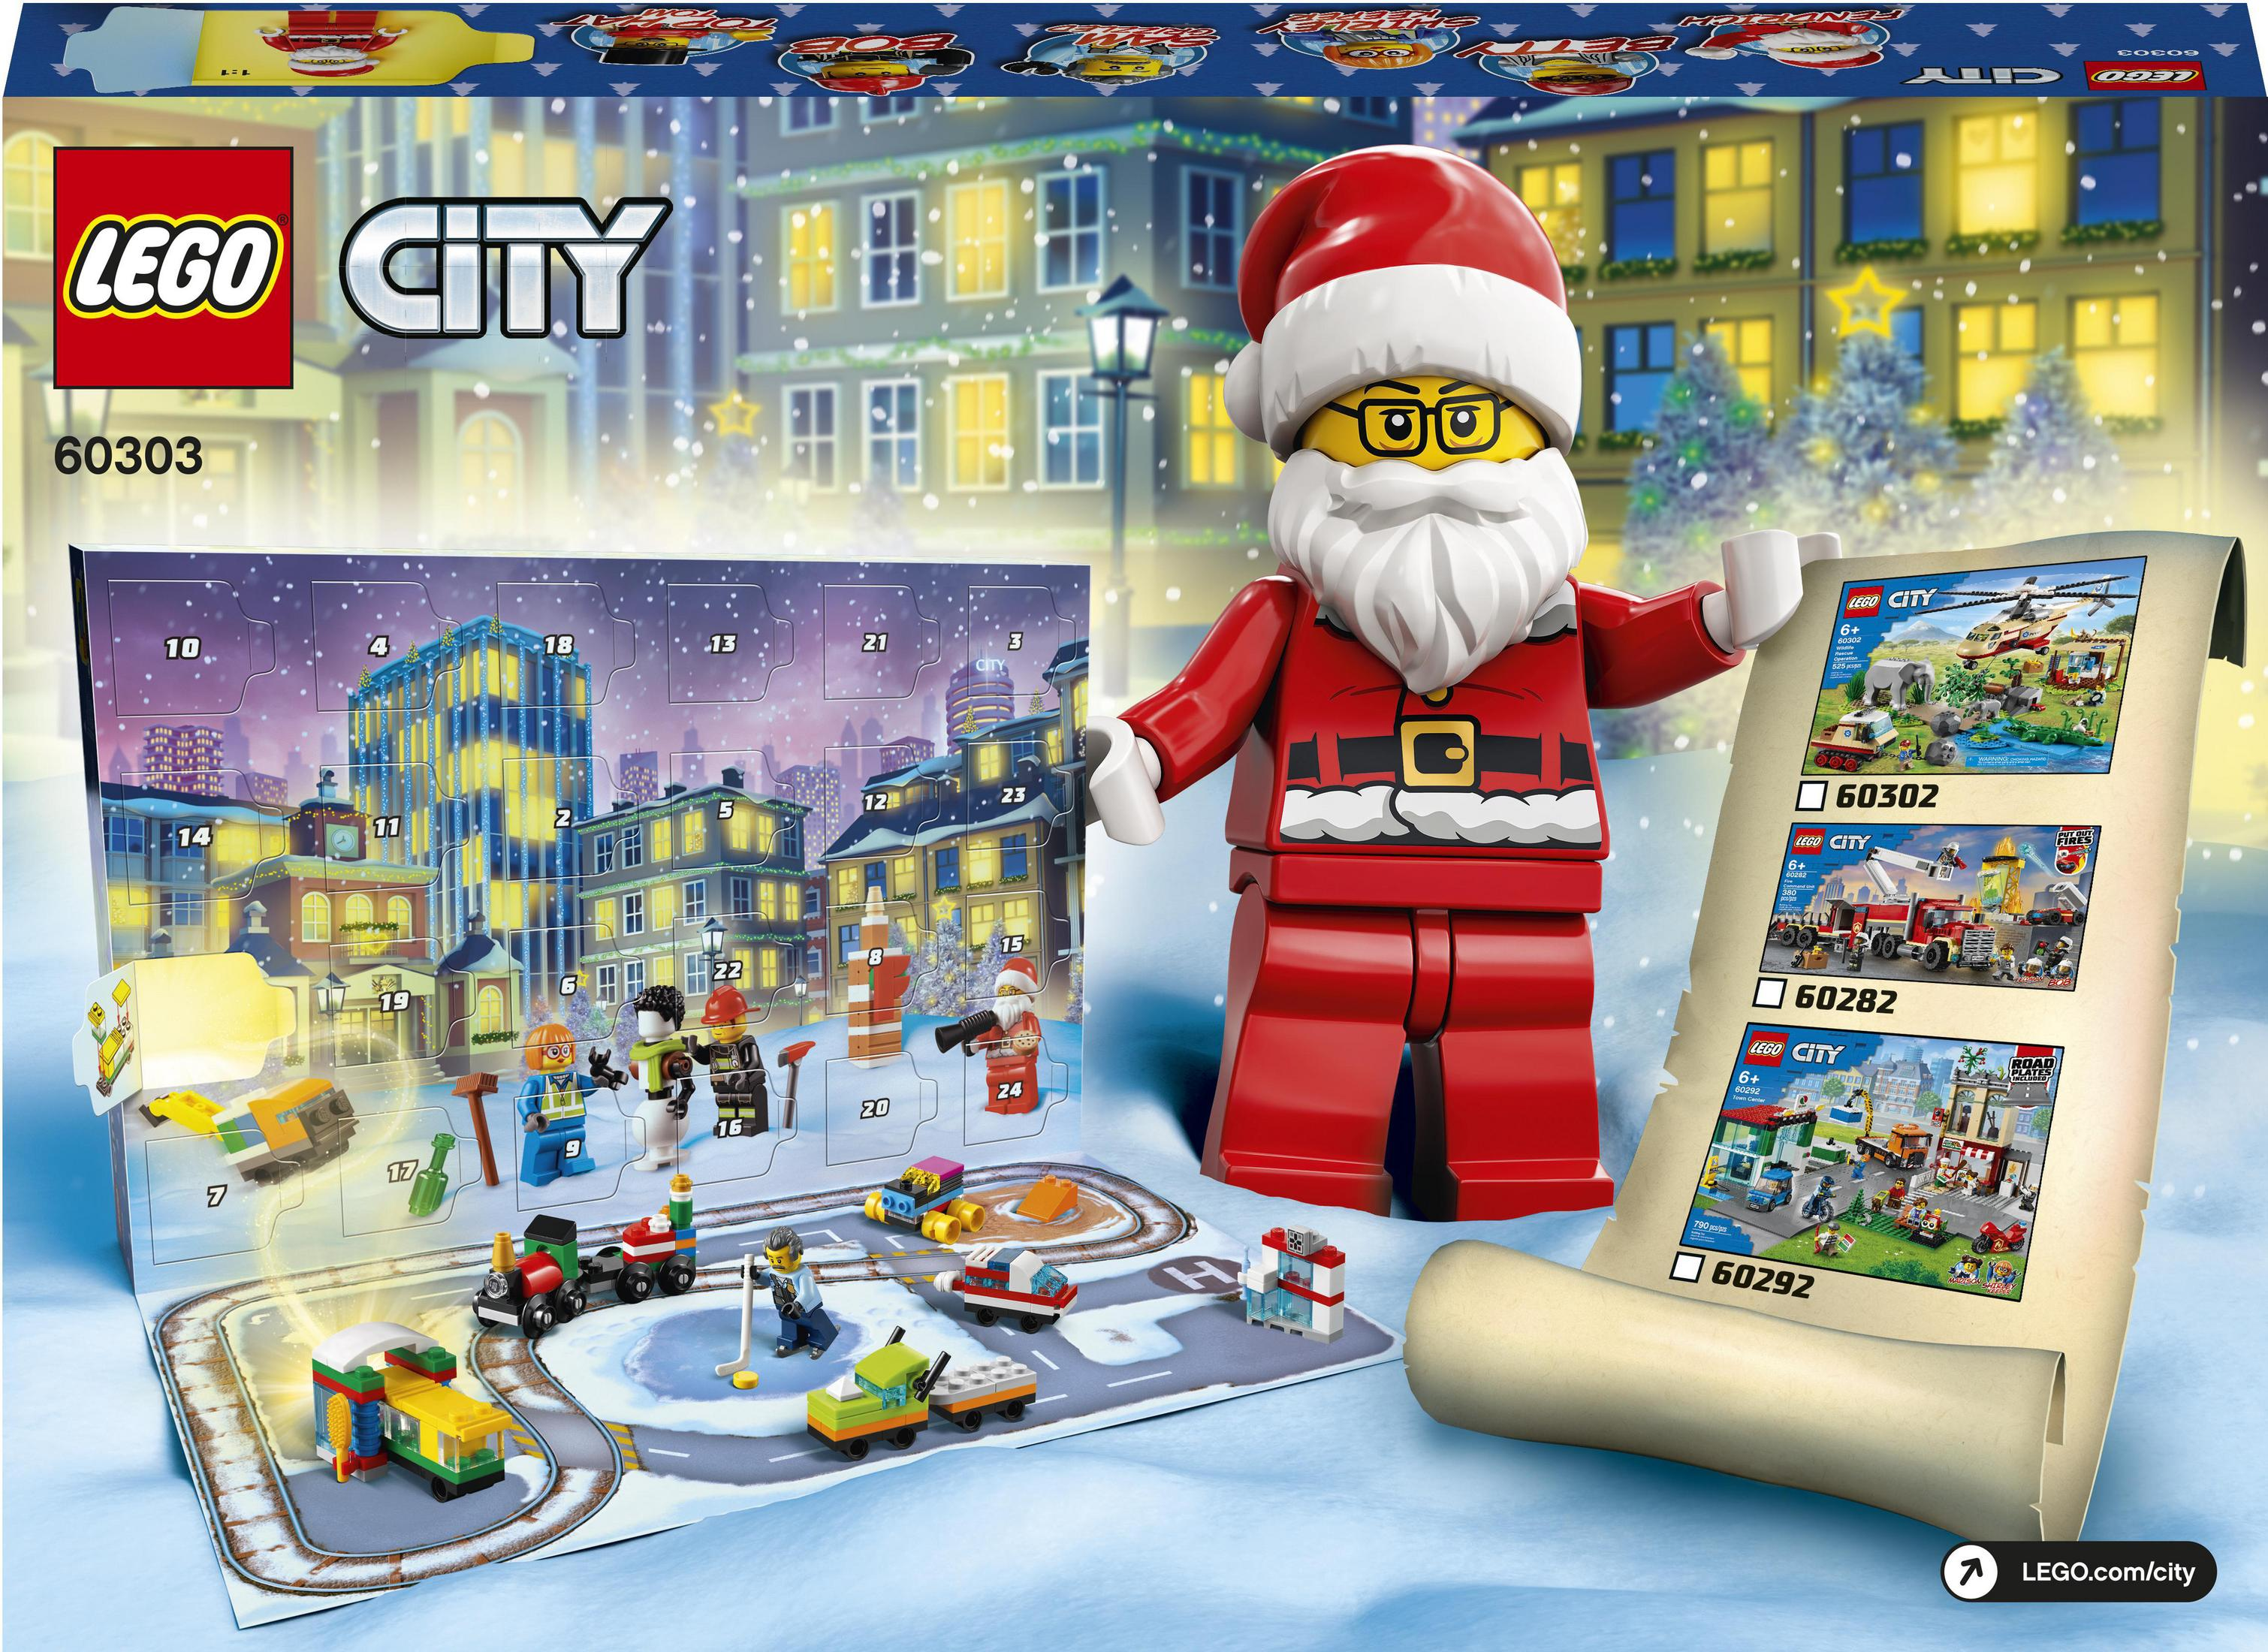 LEGO LEGO ADVENTSKALENDER CITY 60303 Adventskalender, Mehrfarbig